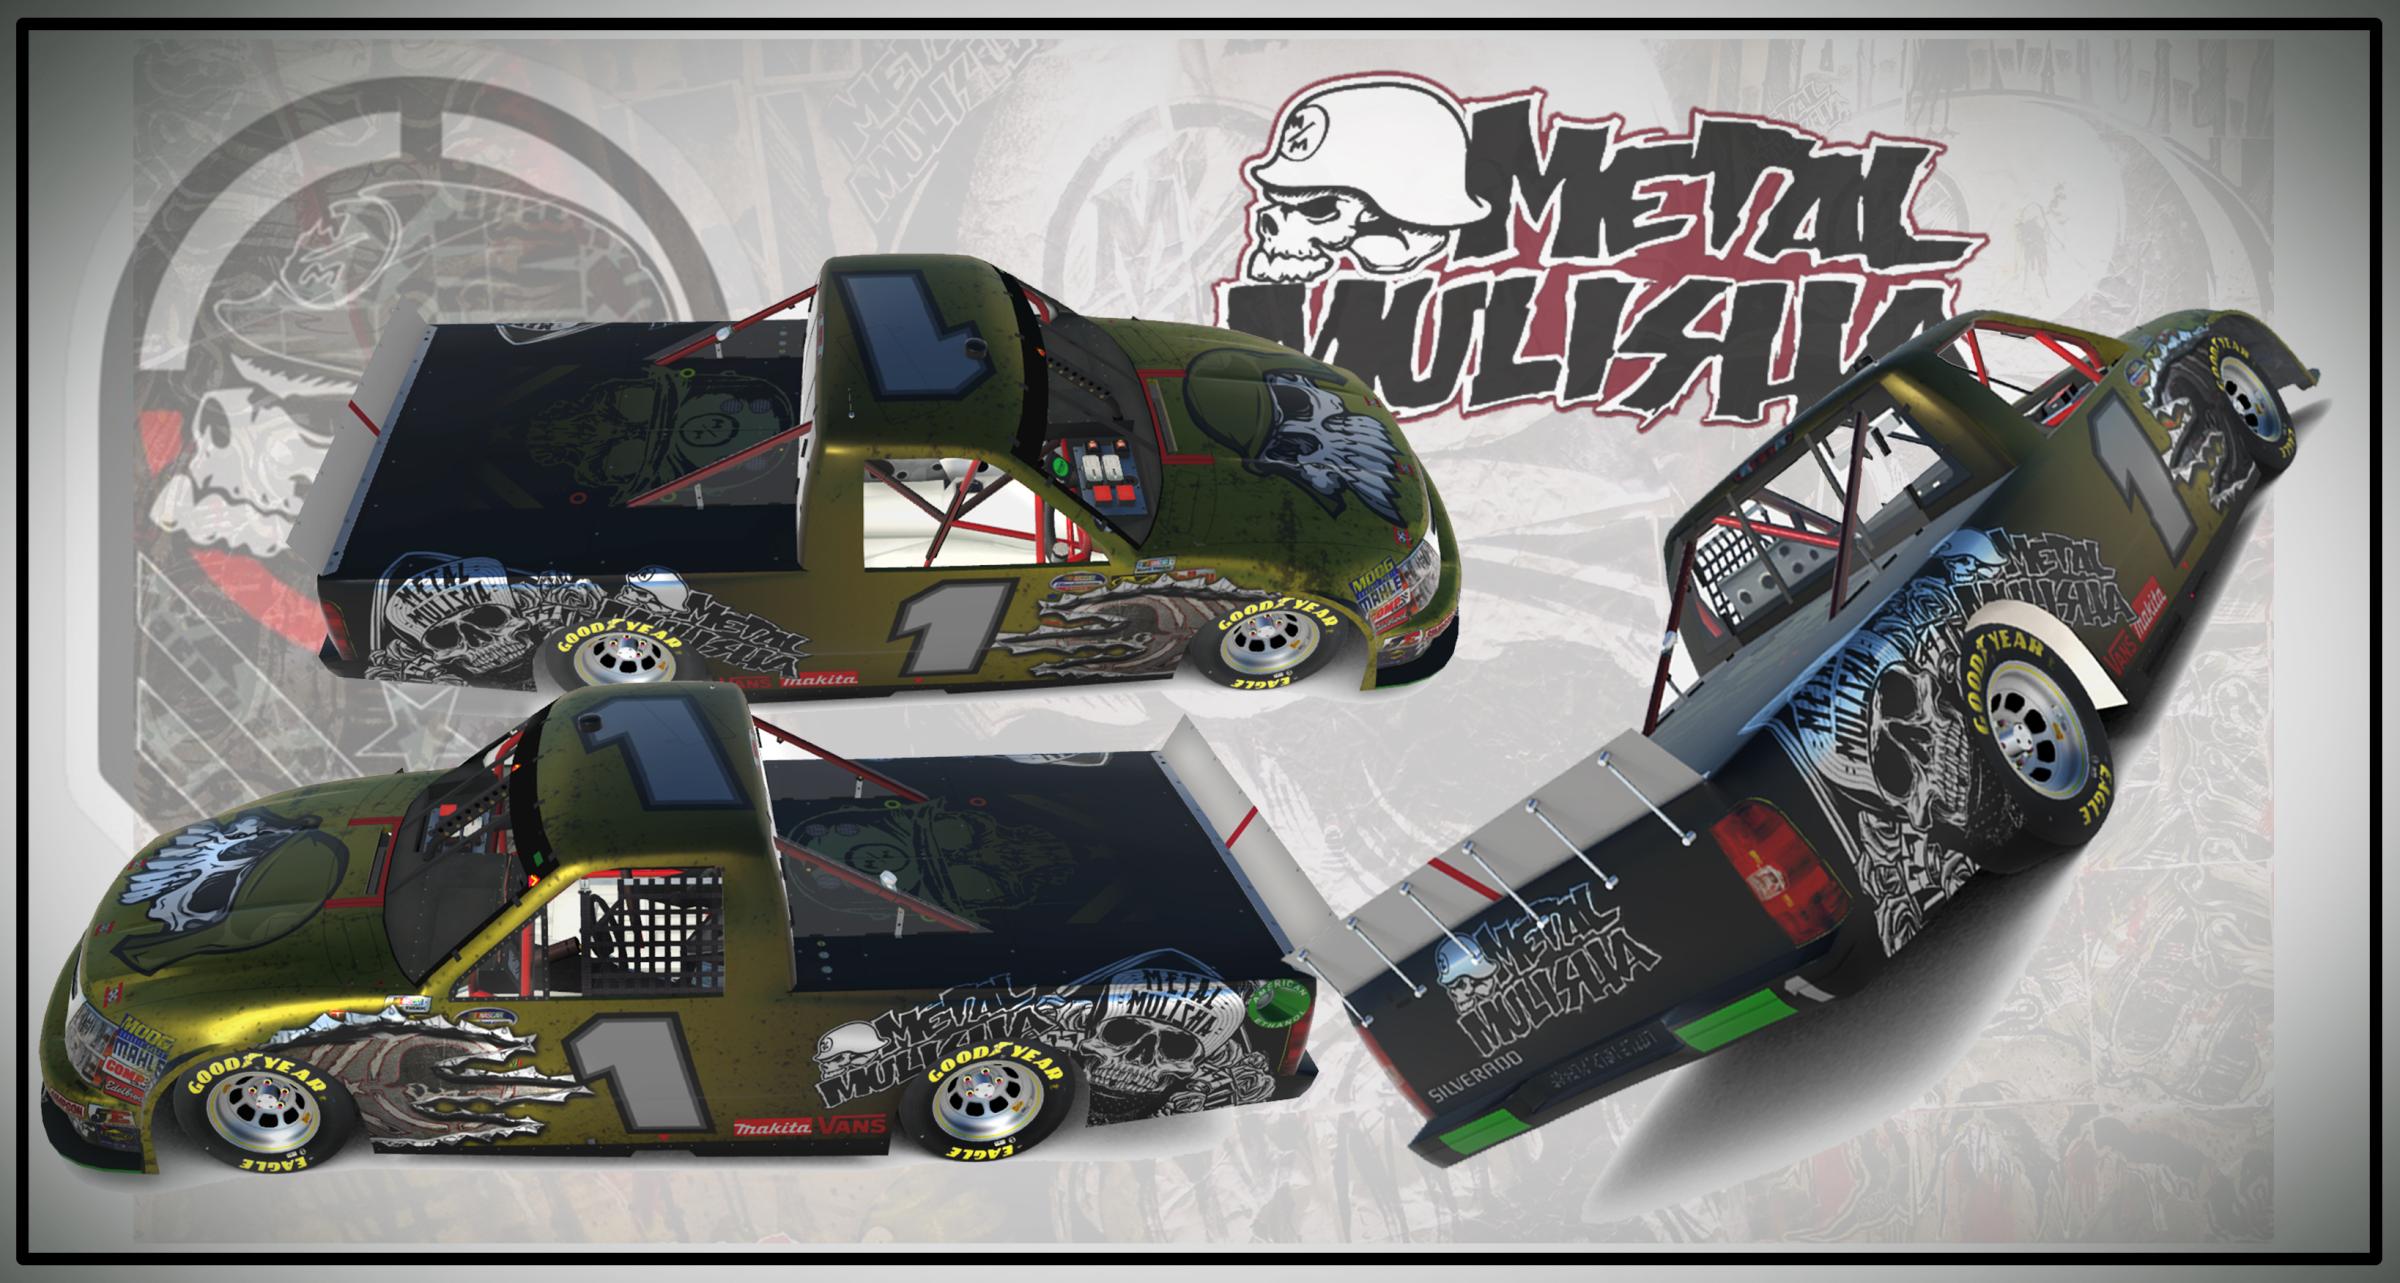 Preview of Metal Mulisha 2008 NASCAR Truck by Josh M.